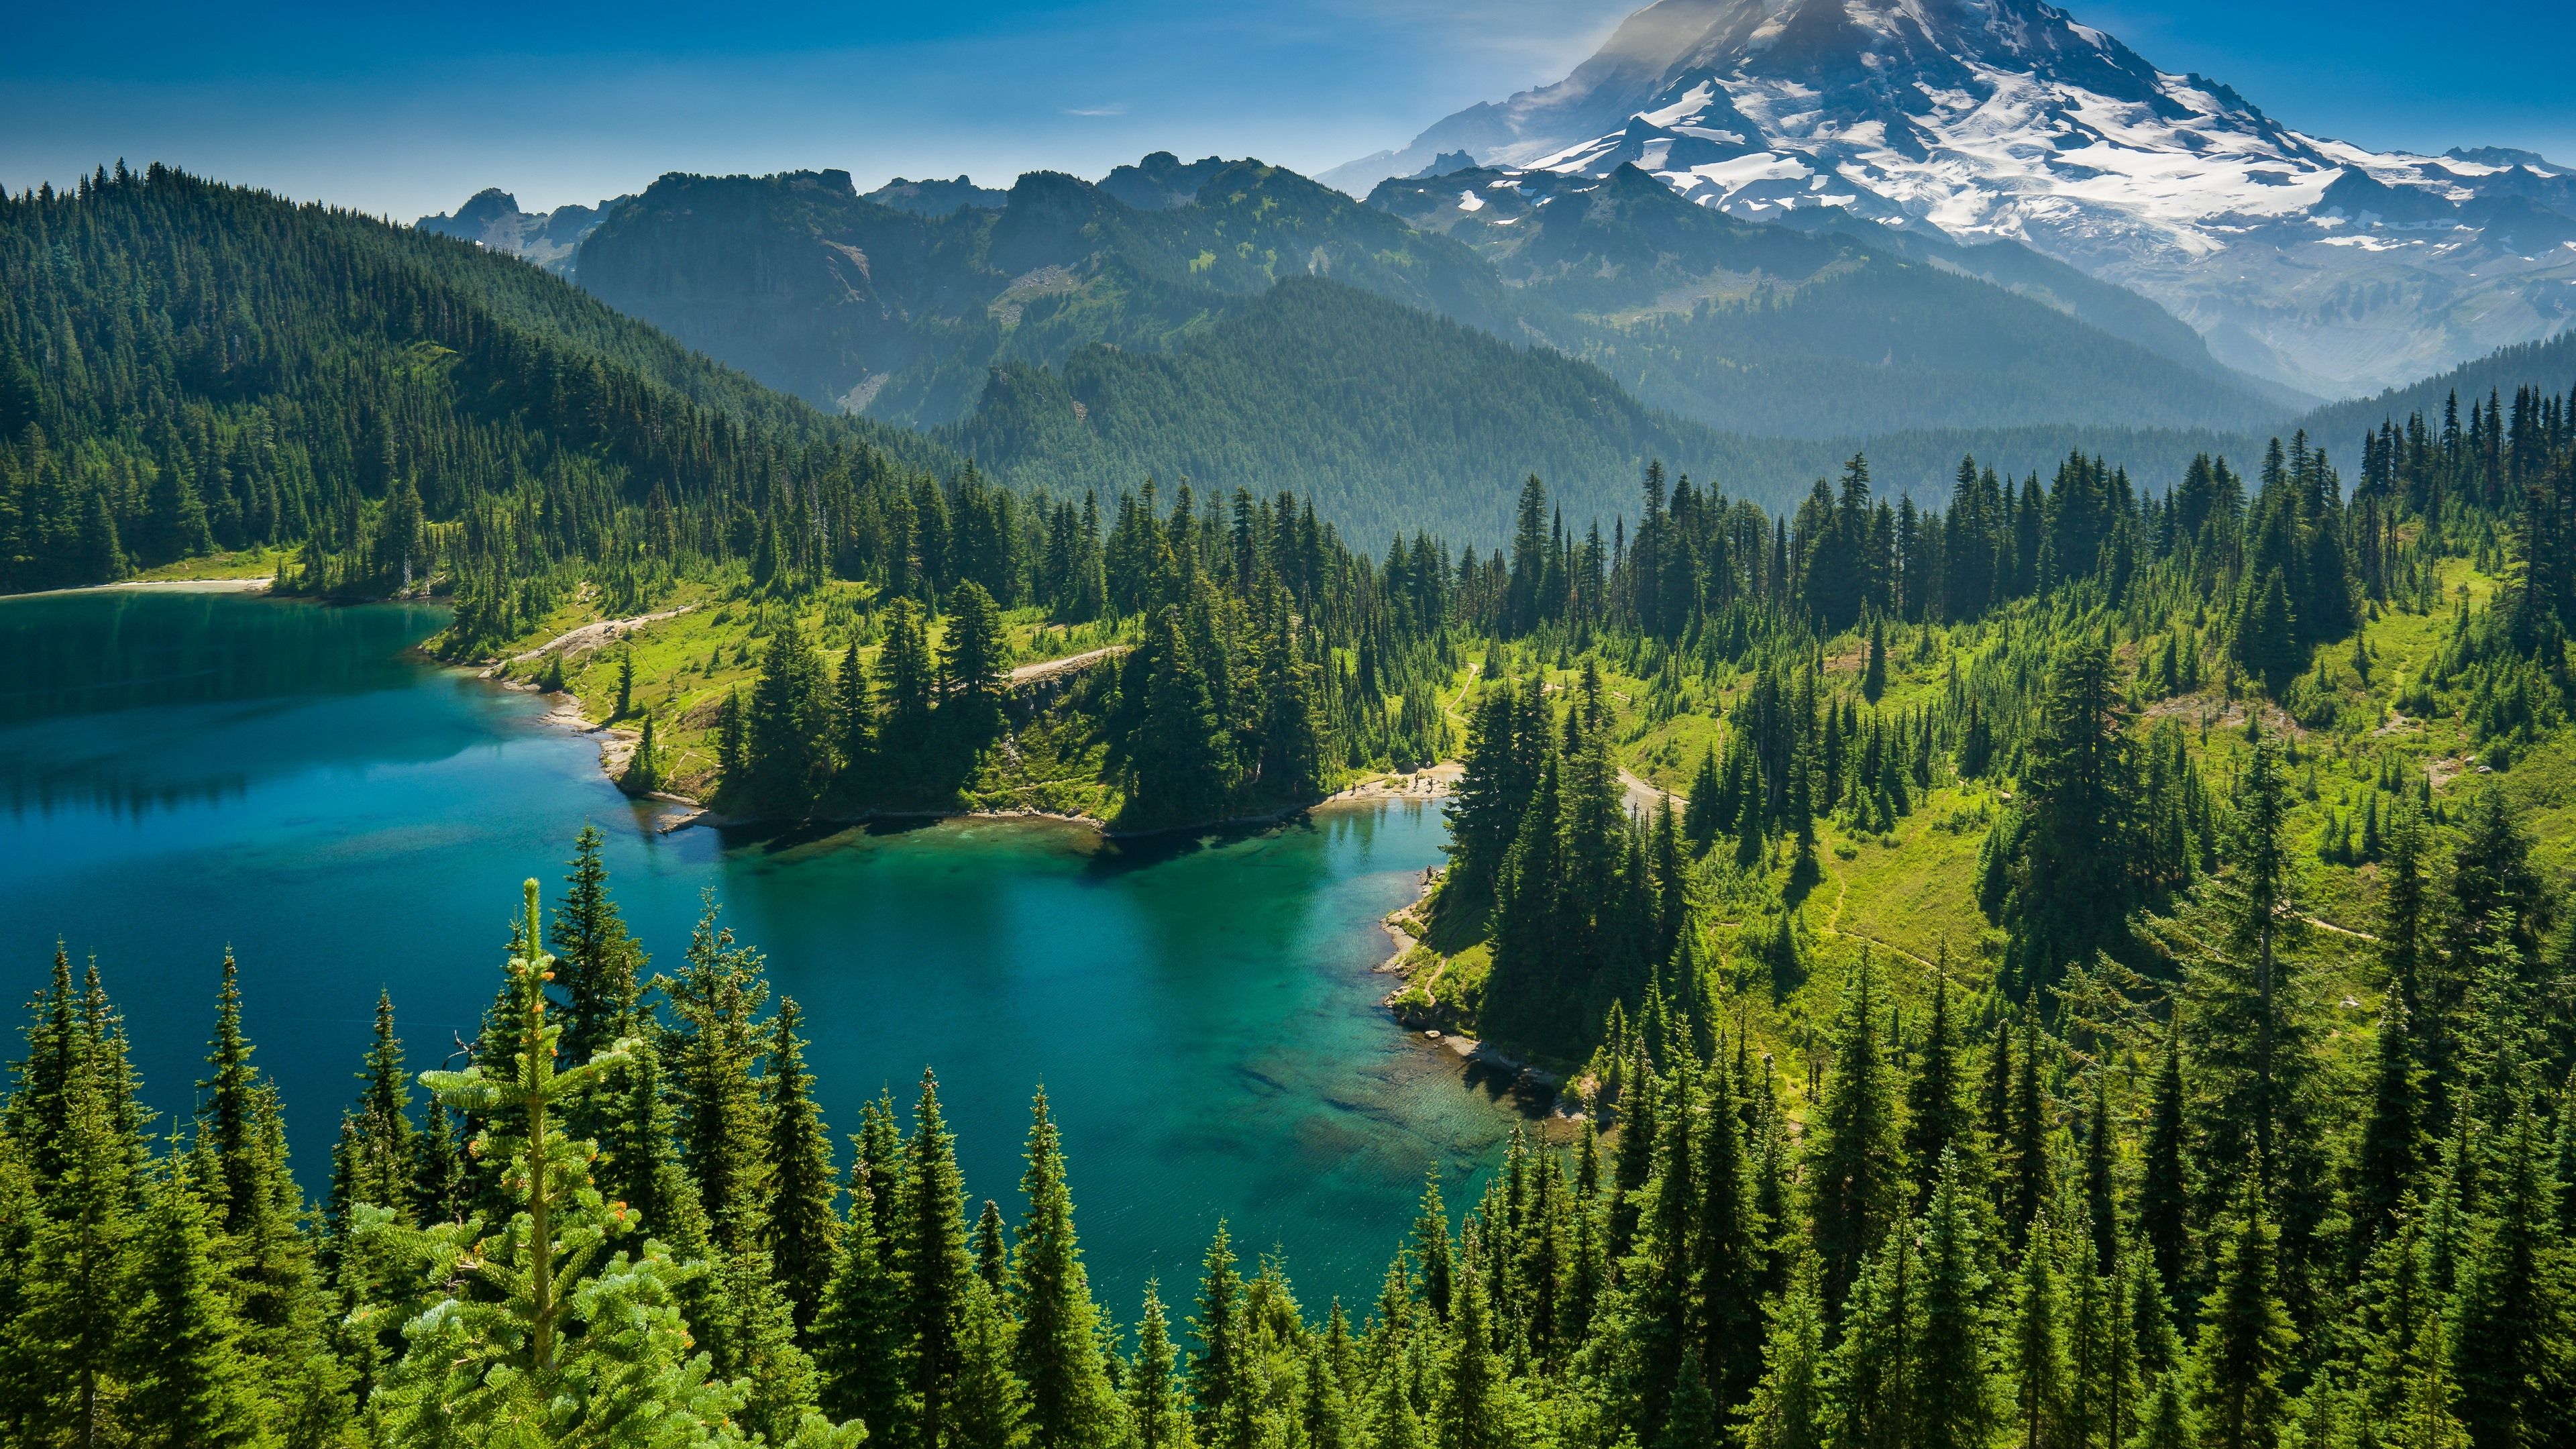  4k Natur Hintergrundbild 3840x2160. Der Mount Rainier, Eunice Lake, Washington State, USA, Bäume, Natur 3840x2160 UHD 4K Hintergrundbilder, HD, Bild